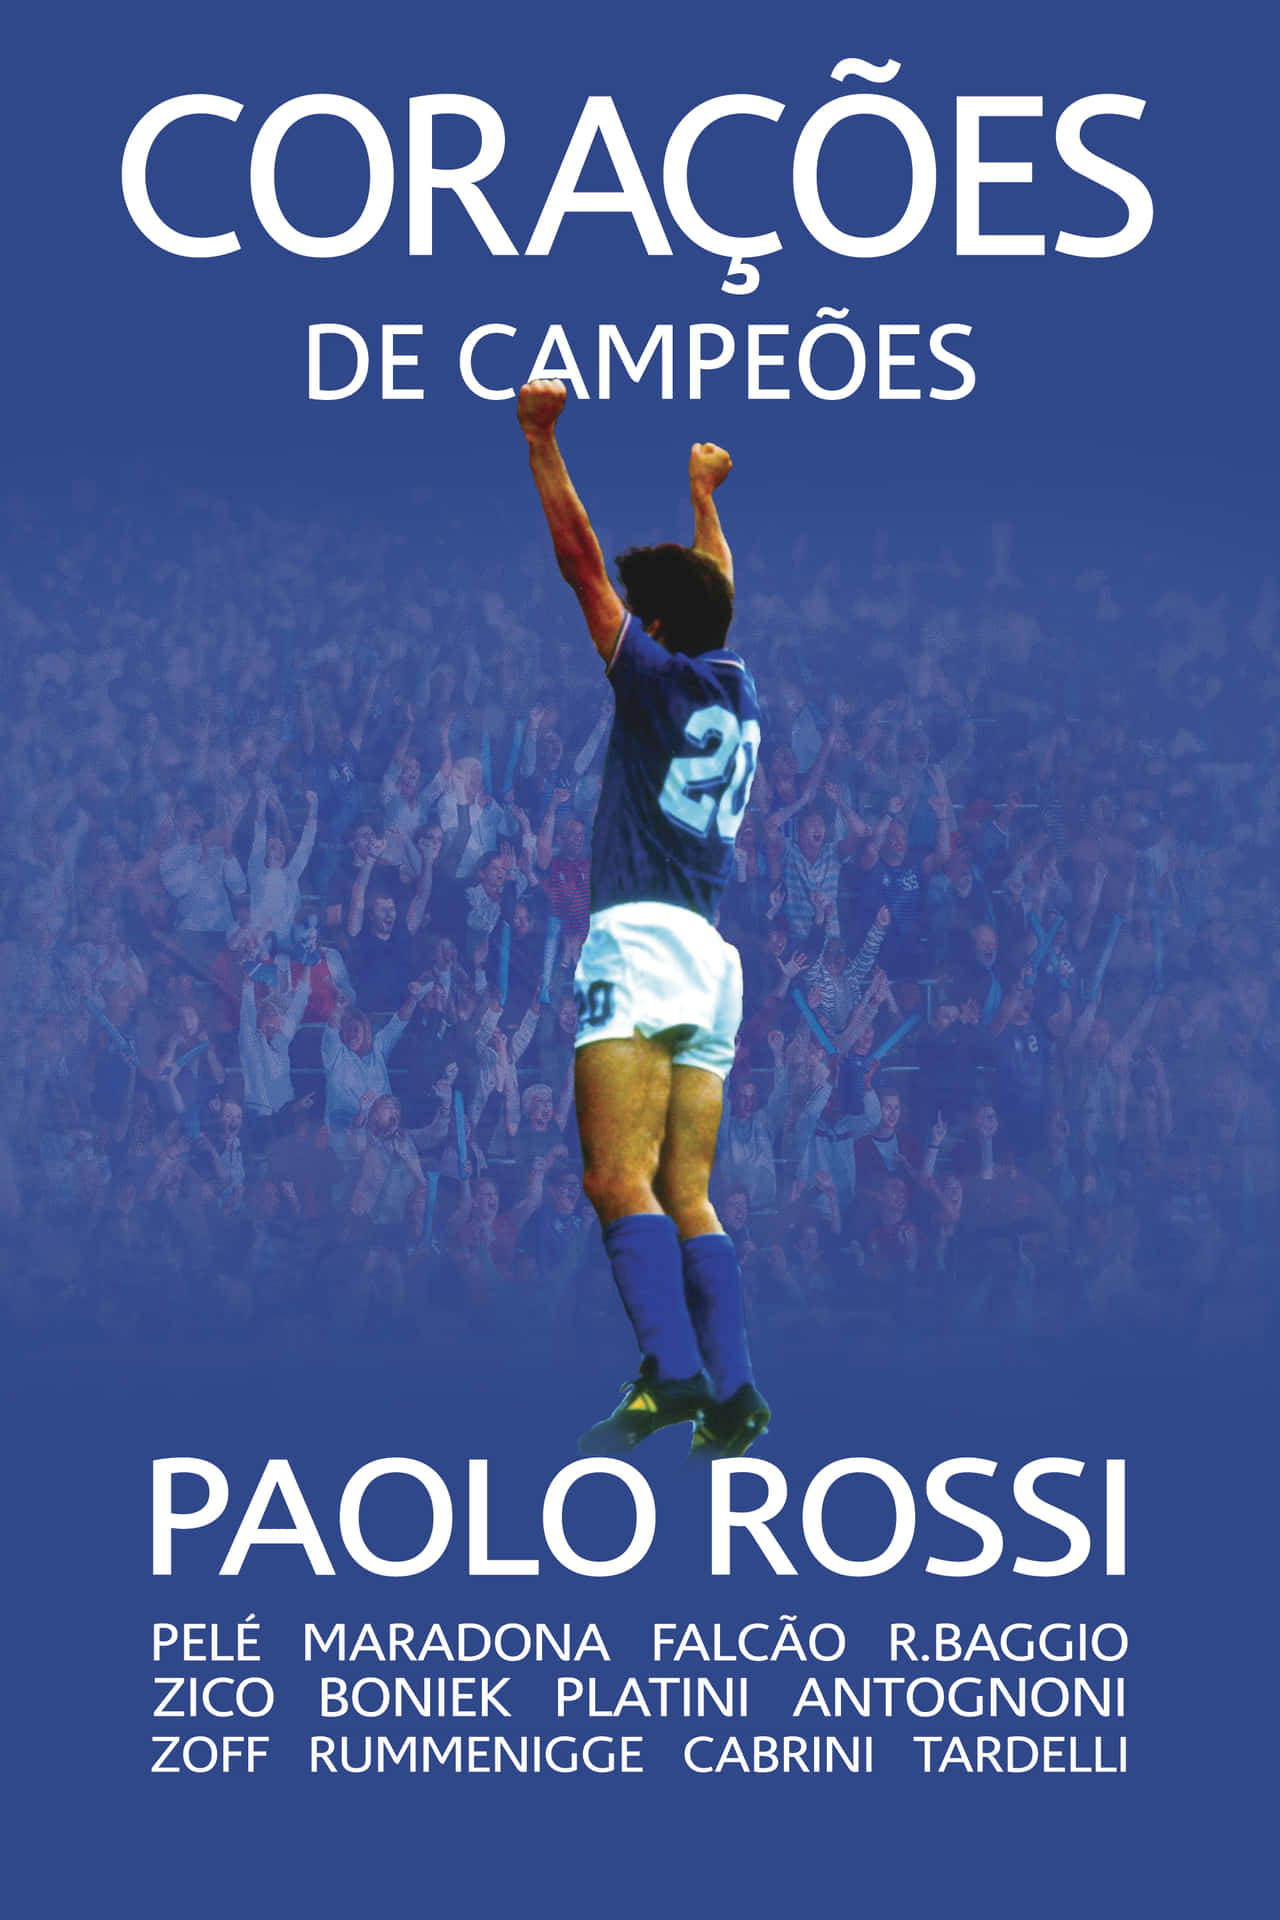 Paolo Rossi Heart Champion Wallpaper